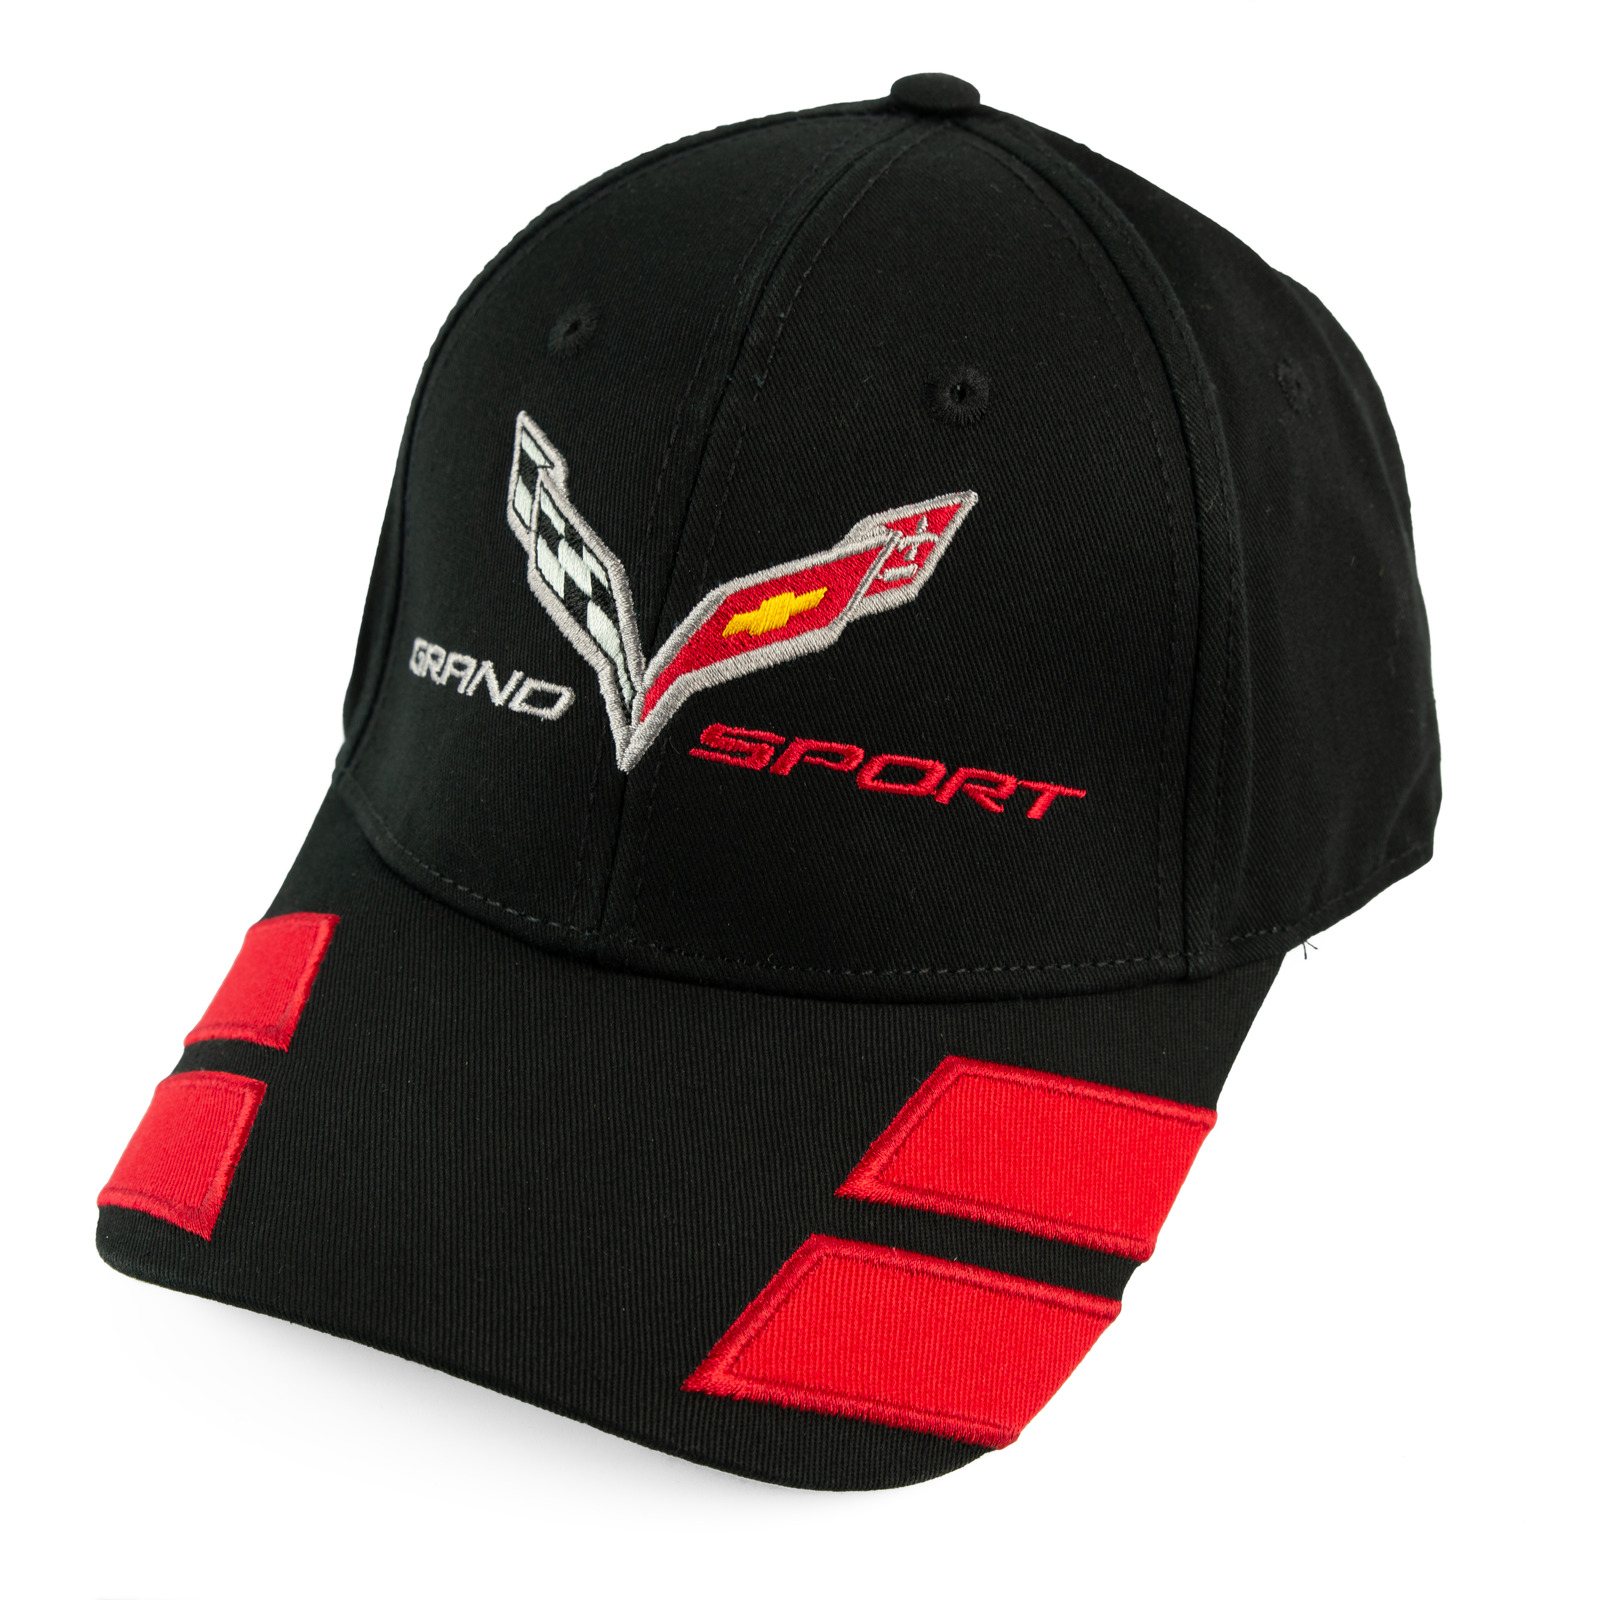 Chevrolet Corvette C7 Grand Sport Racing Stripe Black Hat Cap - SHIPS IN A BOX